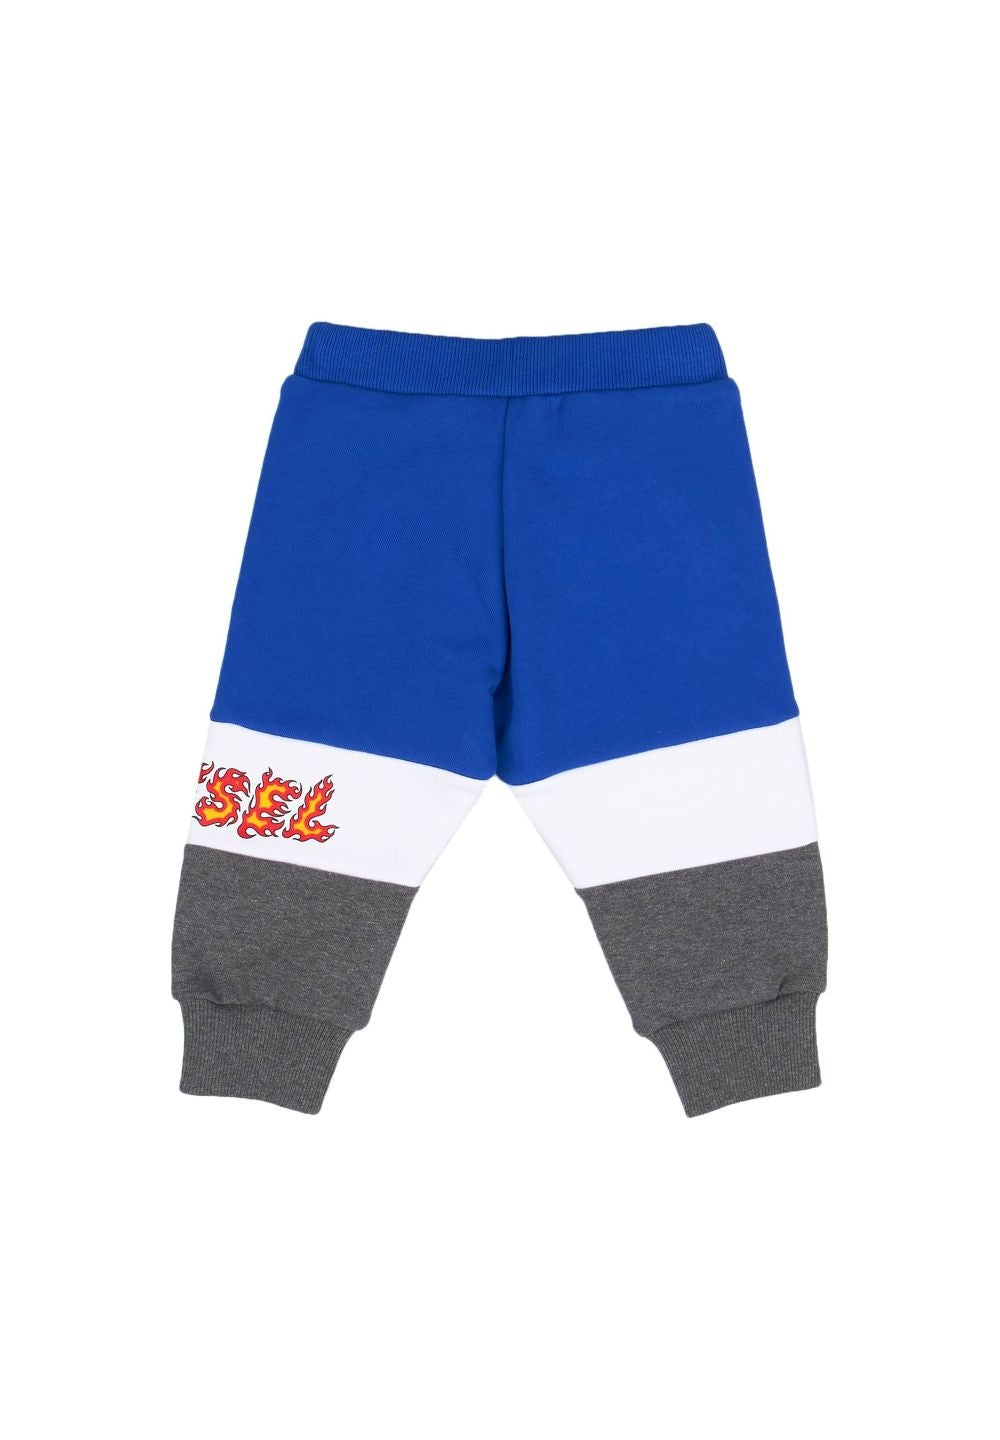 Pantalone felpa blu royal per bambino - Primamoda kids